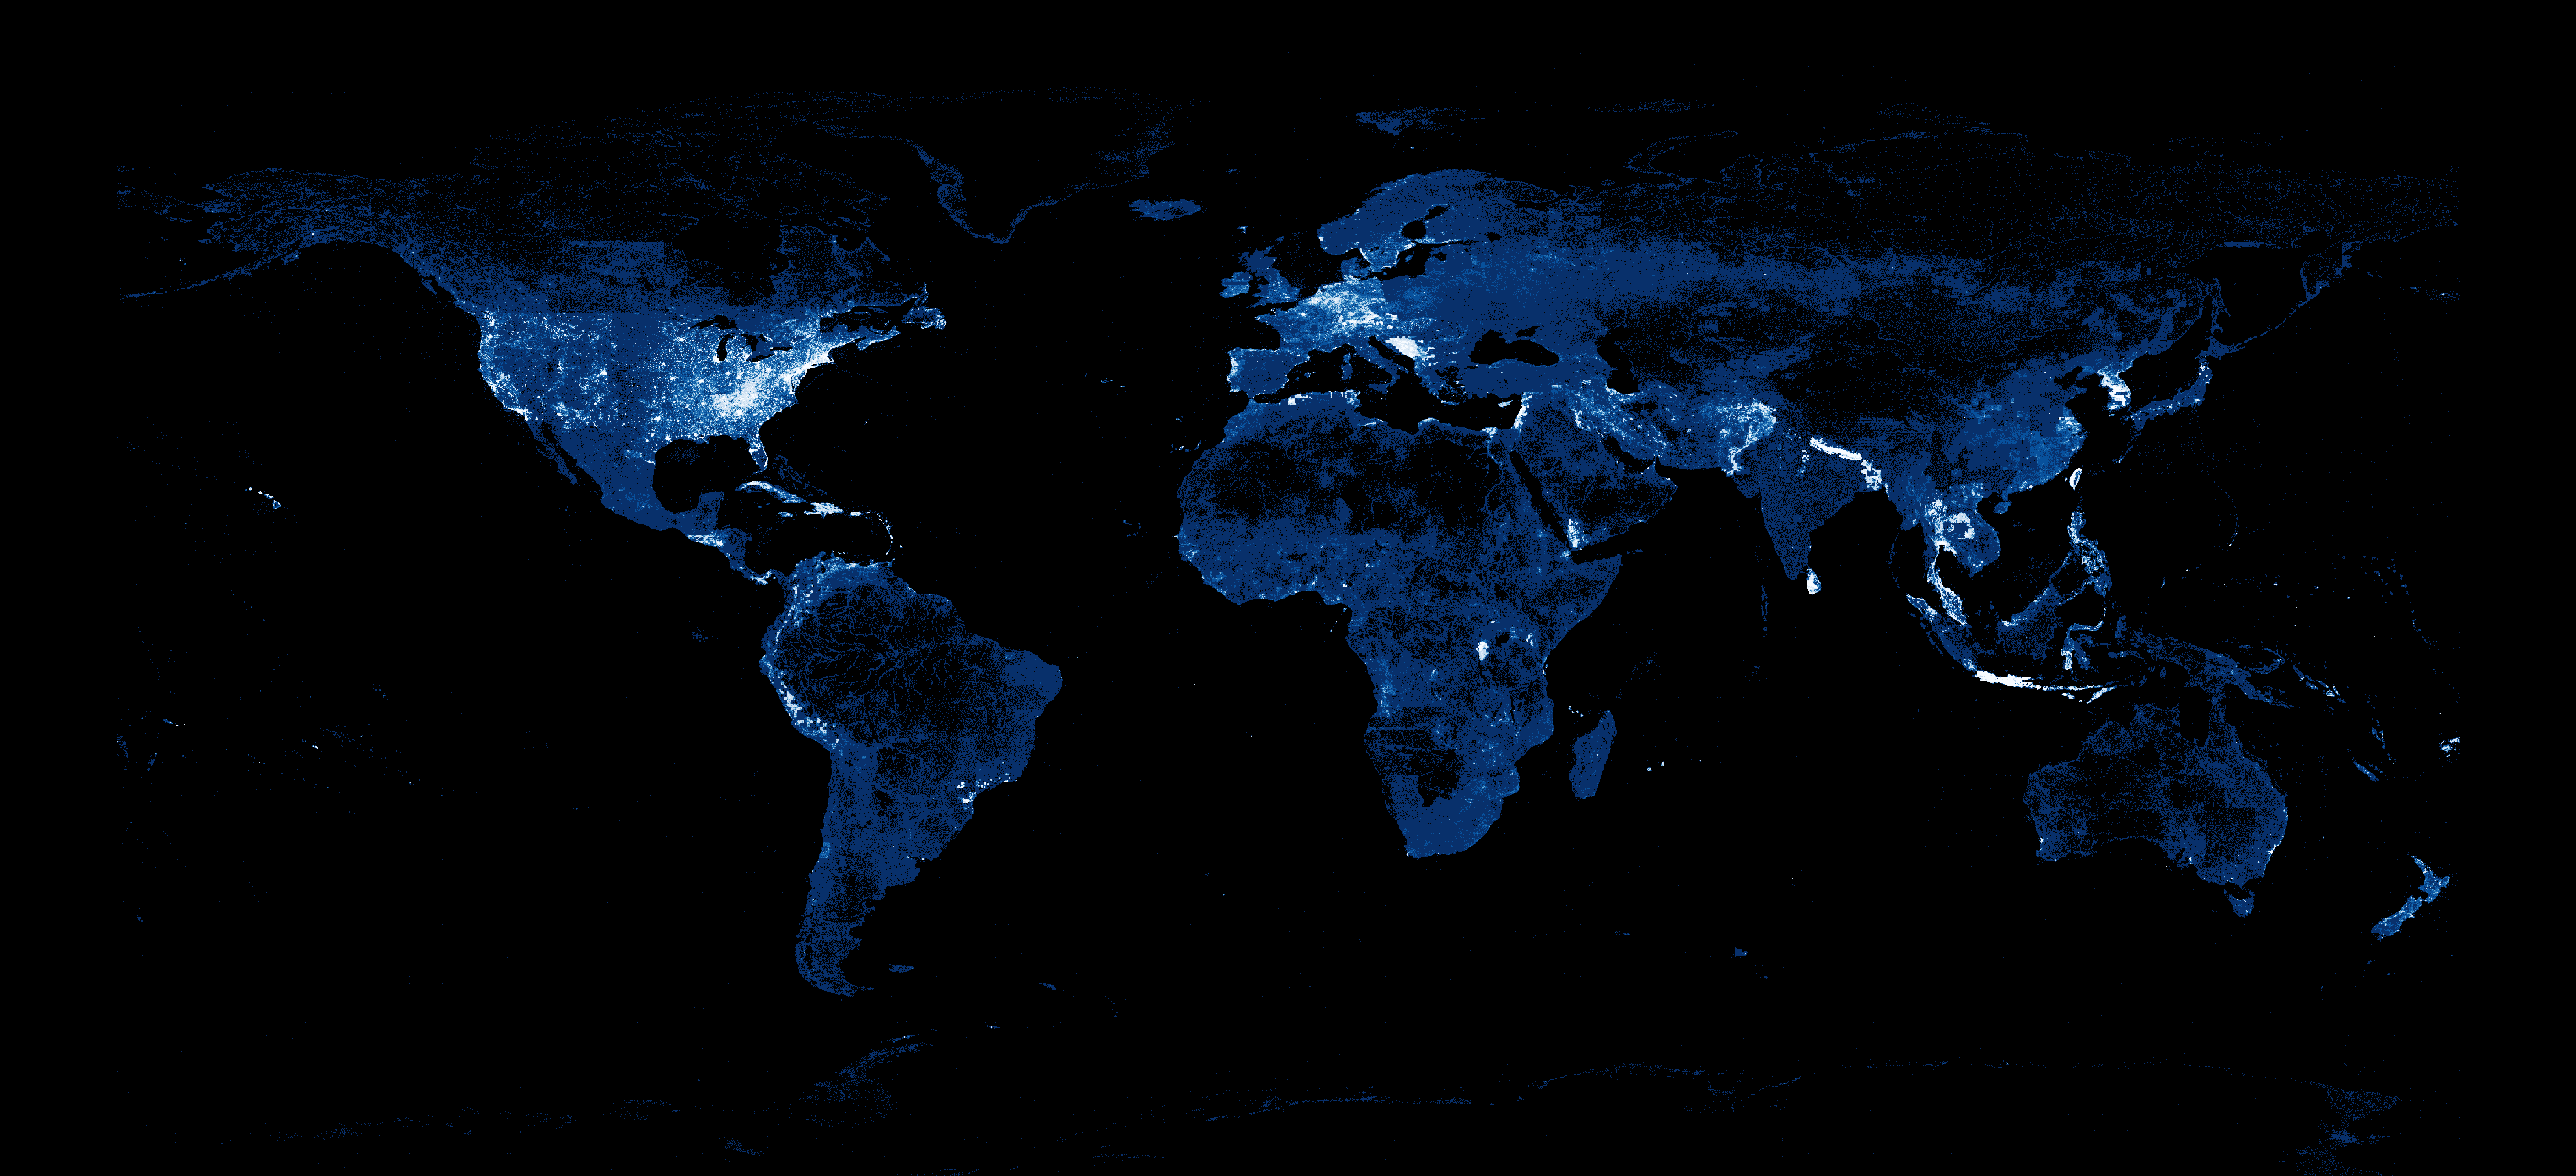 Dunya ray xcvi. World Map. Темная цифровая карта.